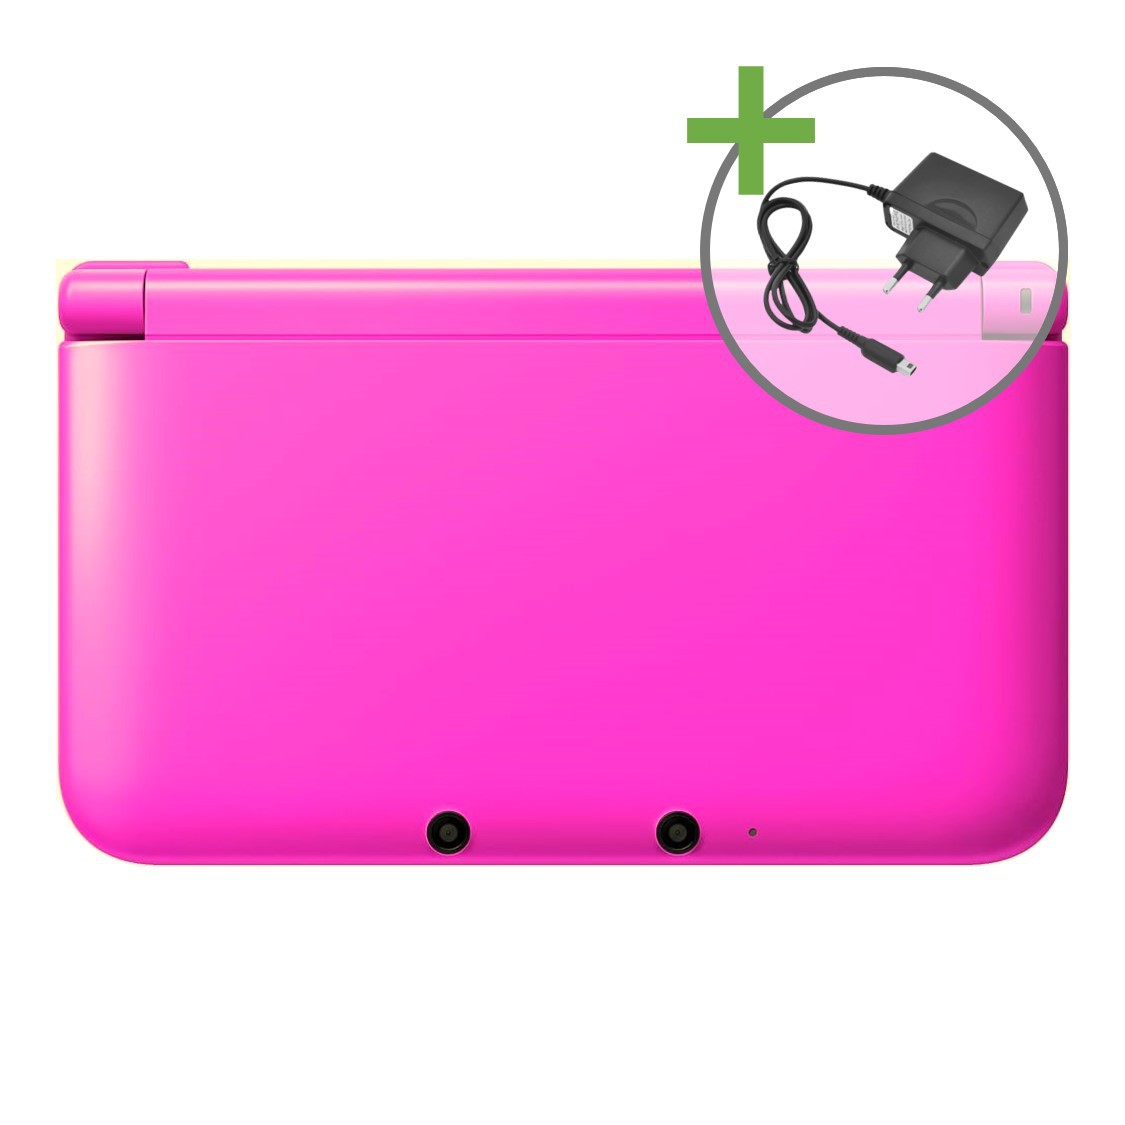 Nintendo 3DS XL - Pink - Nintendo 3DS Hardware - 3